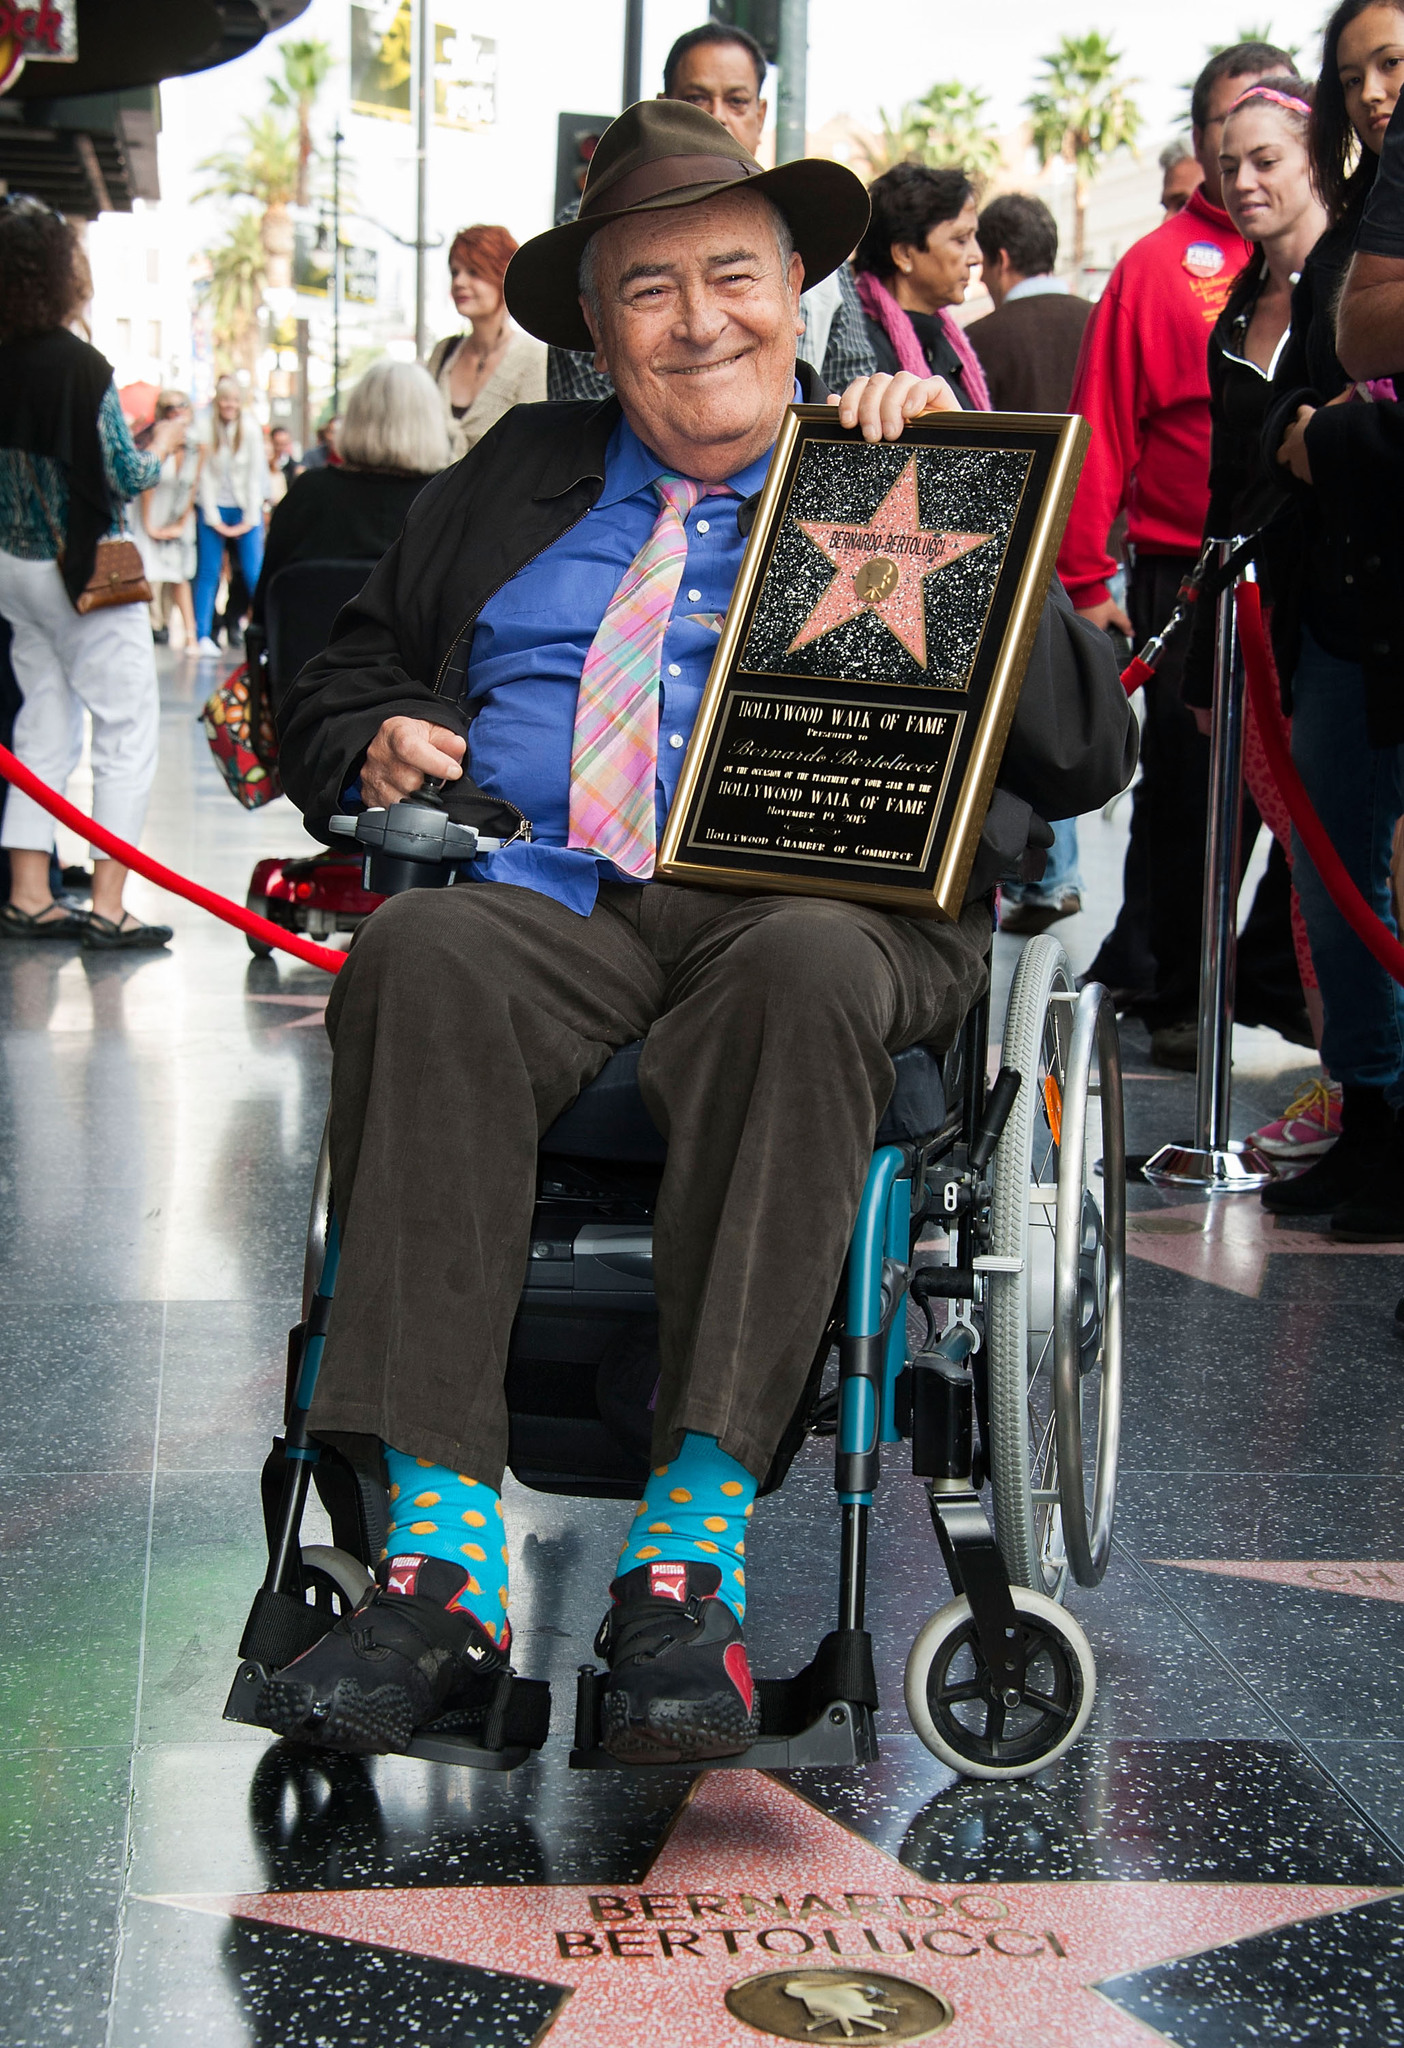 Director Bernardo Bertolucci celebrates his Star on the Hollywood Walk of Fame on November 19, 2013 in Hollywood, California.